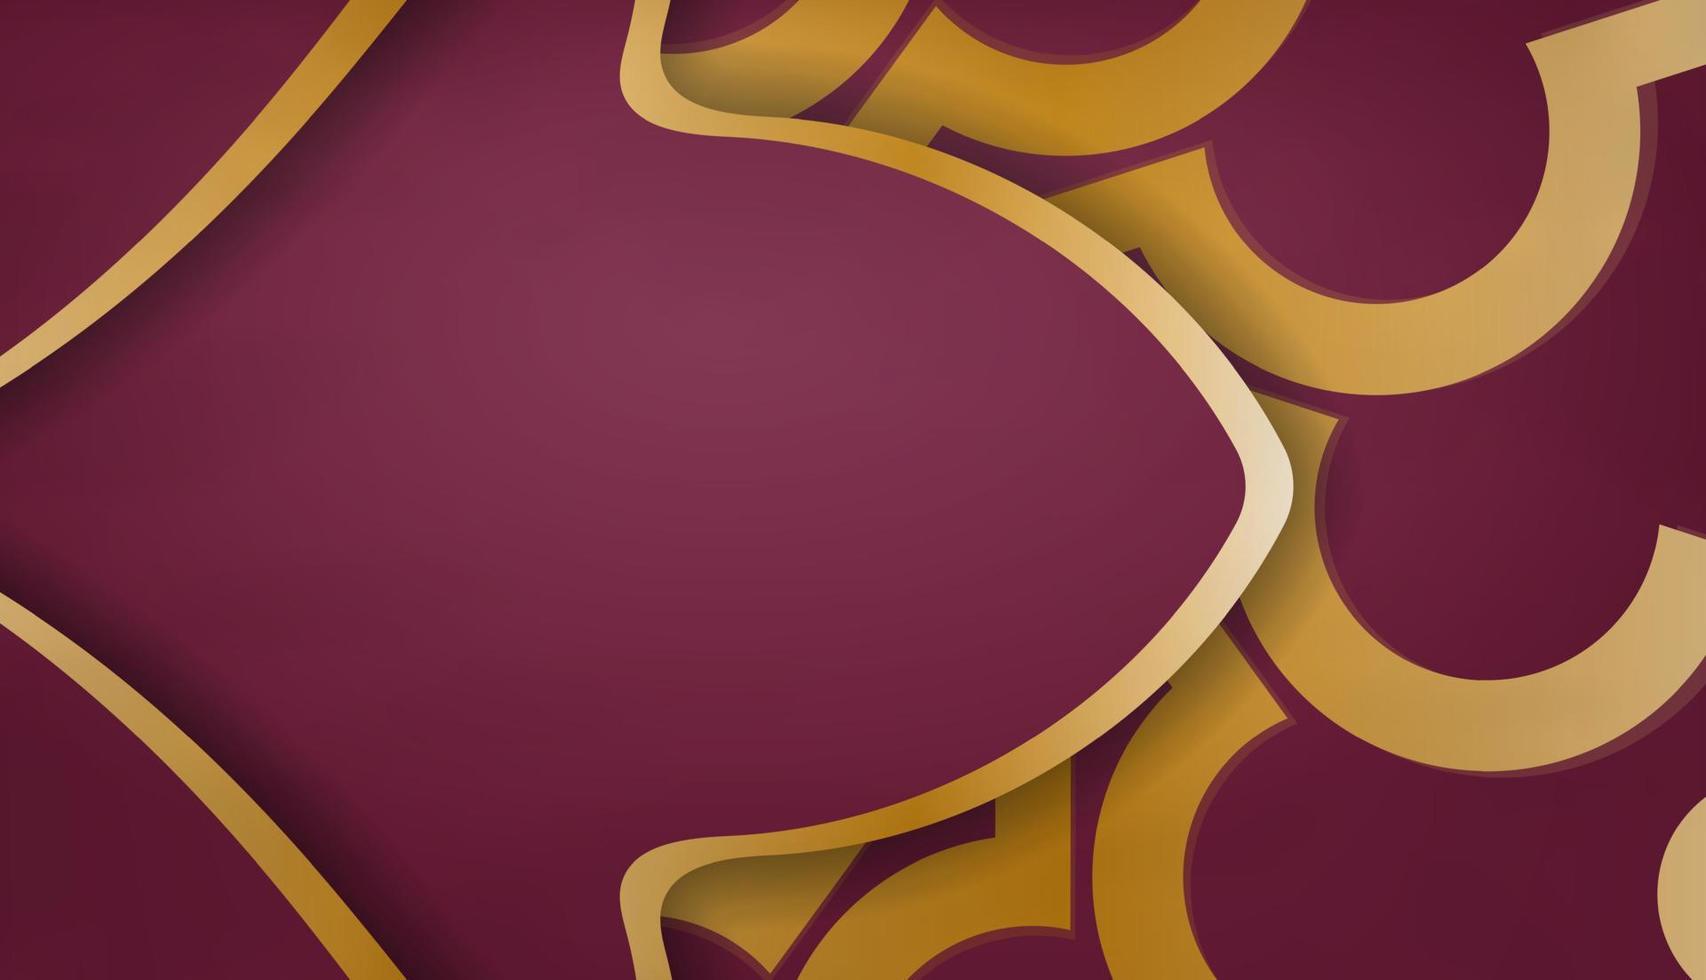 Baner in Burgunderfarbe mit Mandala-Goldmuster für Design unter dem Text vektor